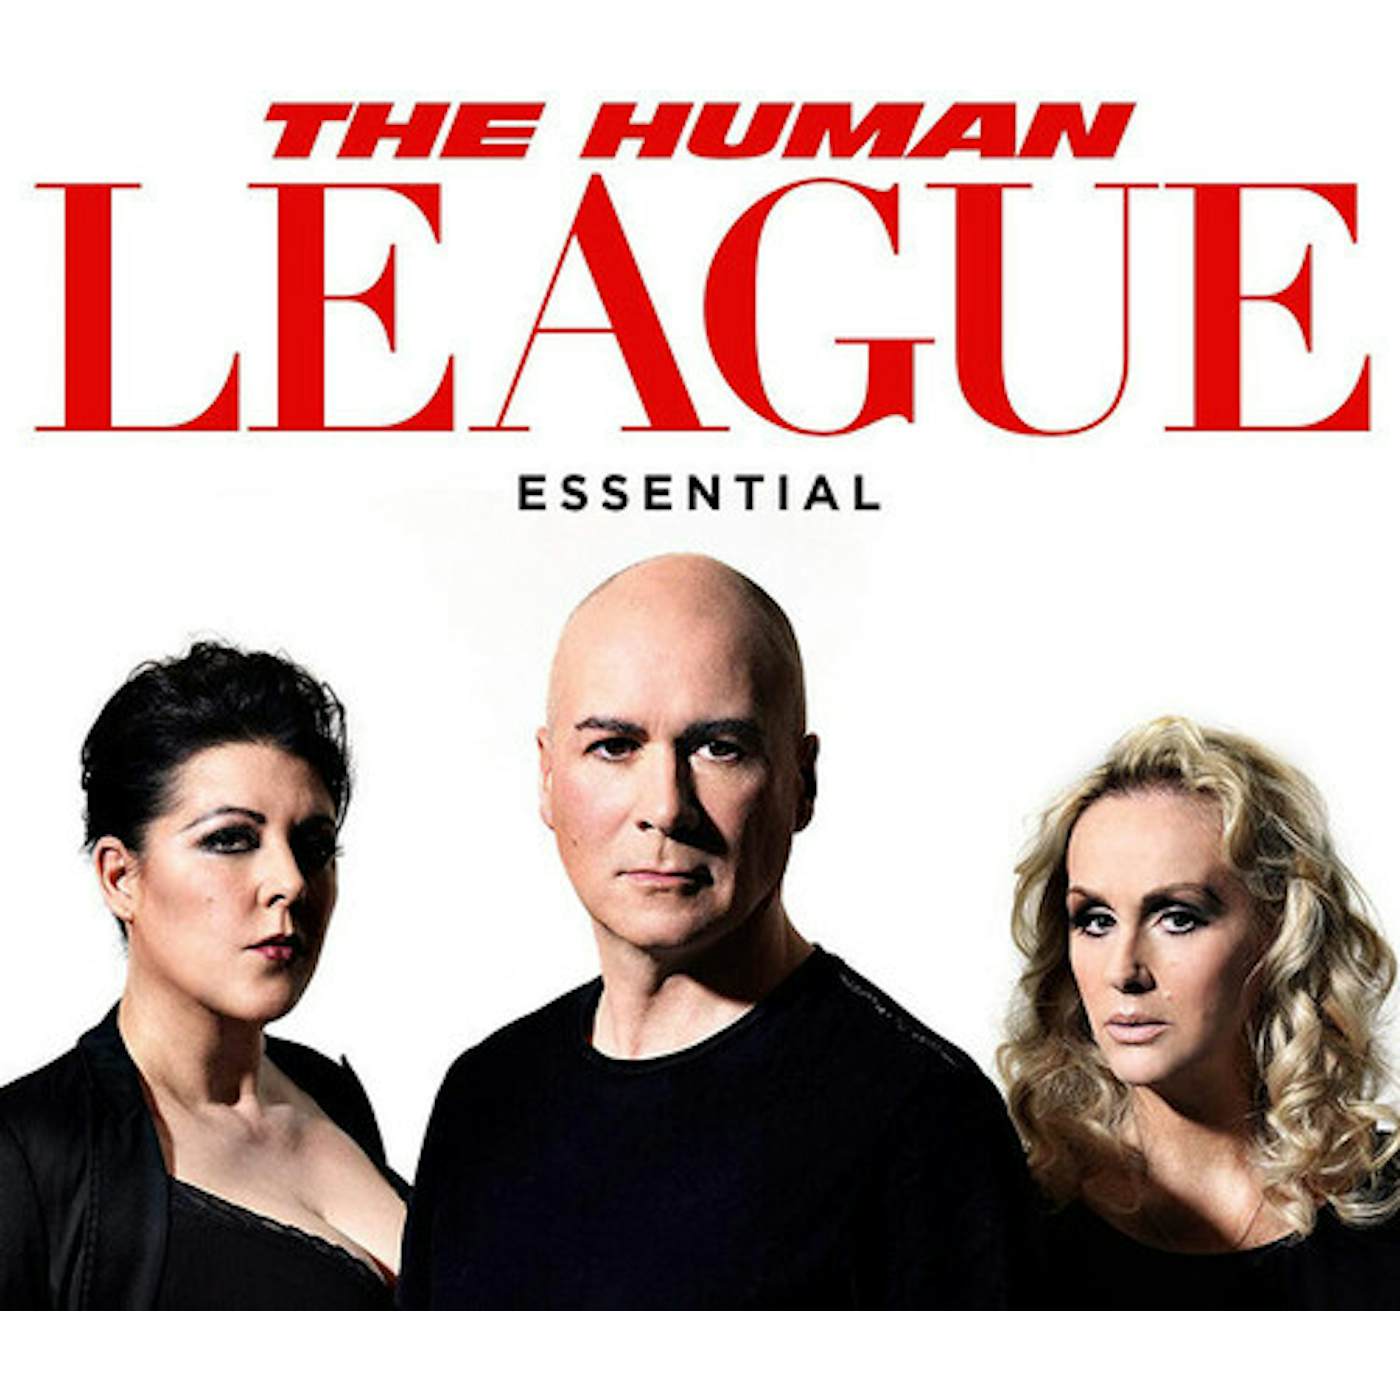 ESSENTIAL The Human League CD